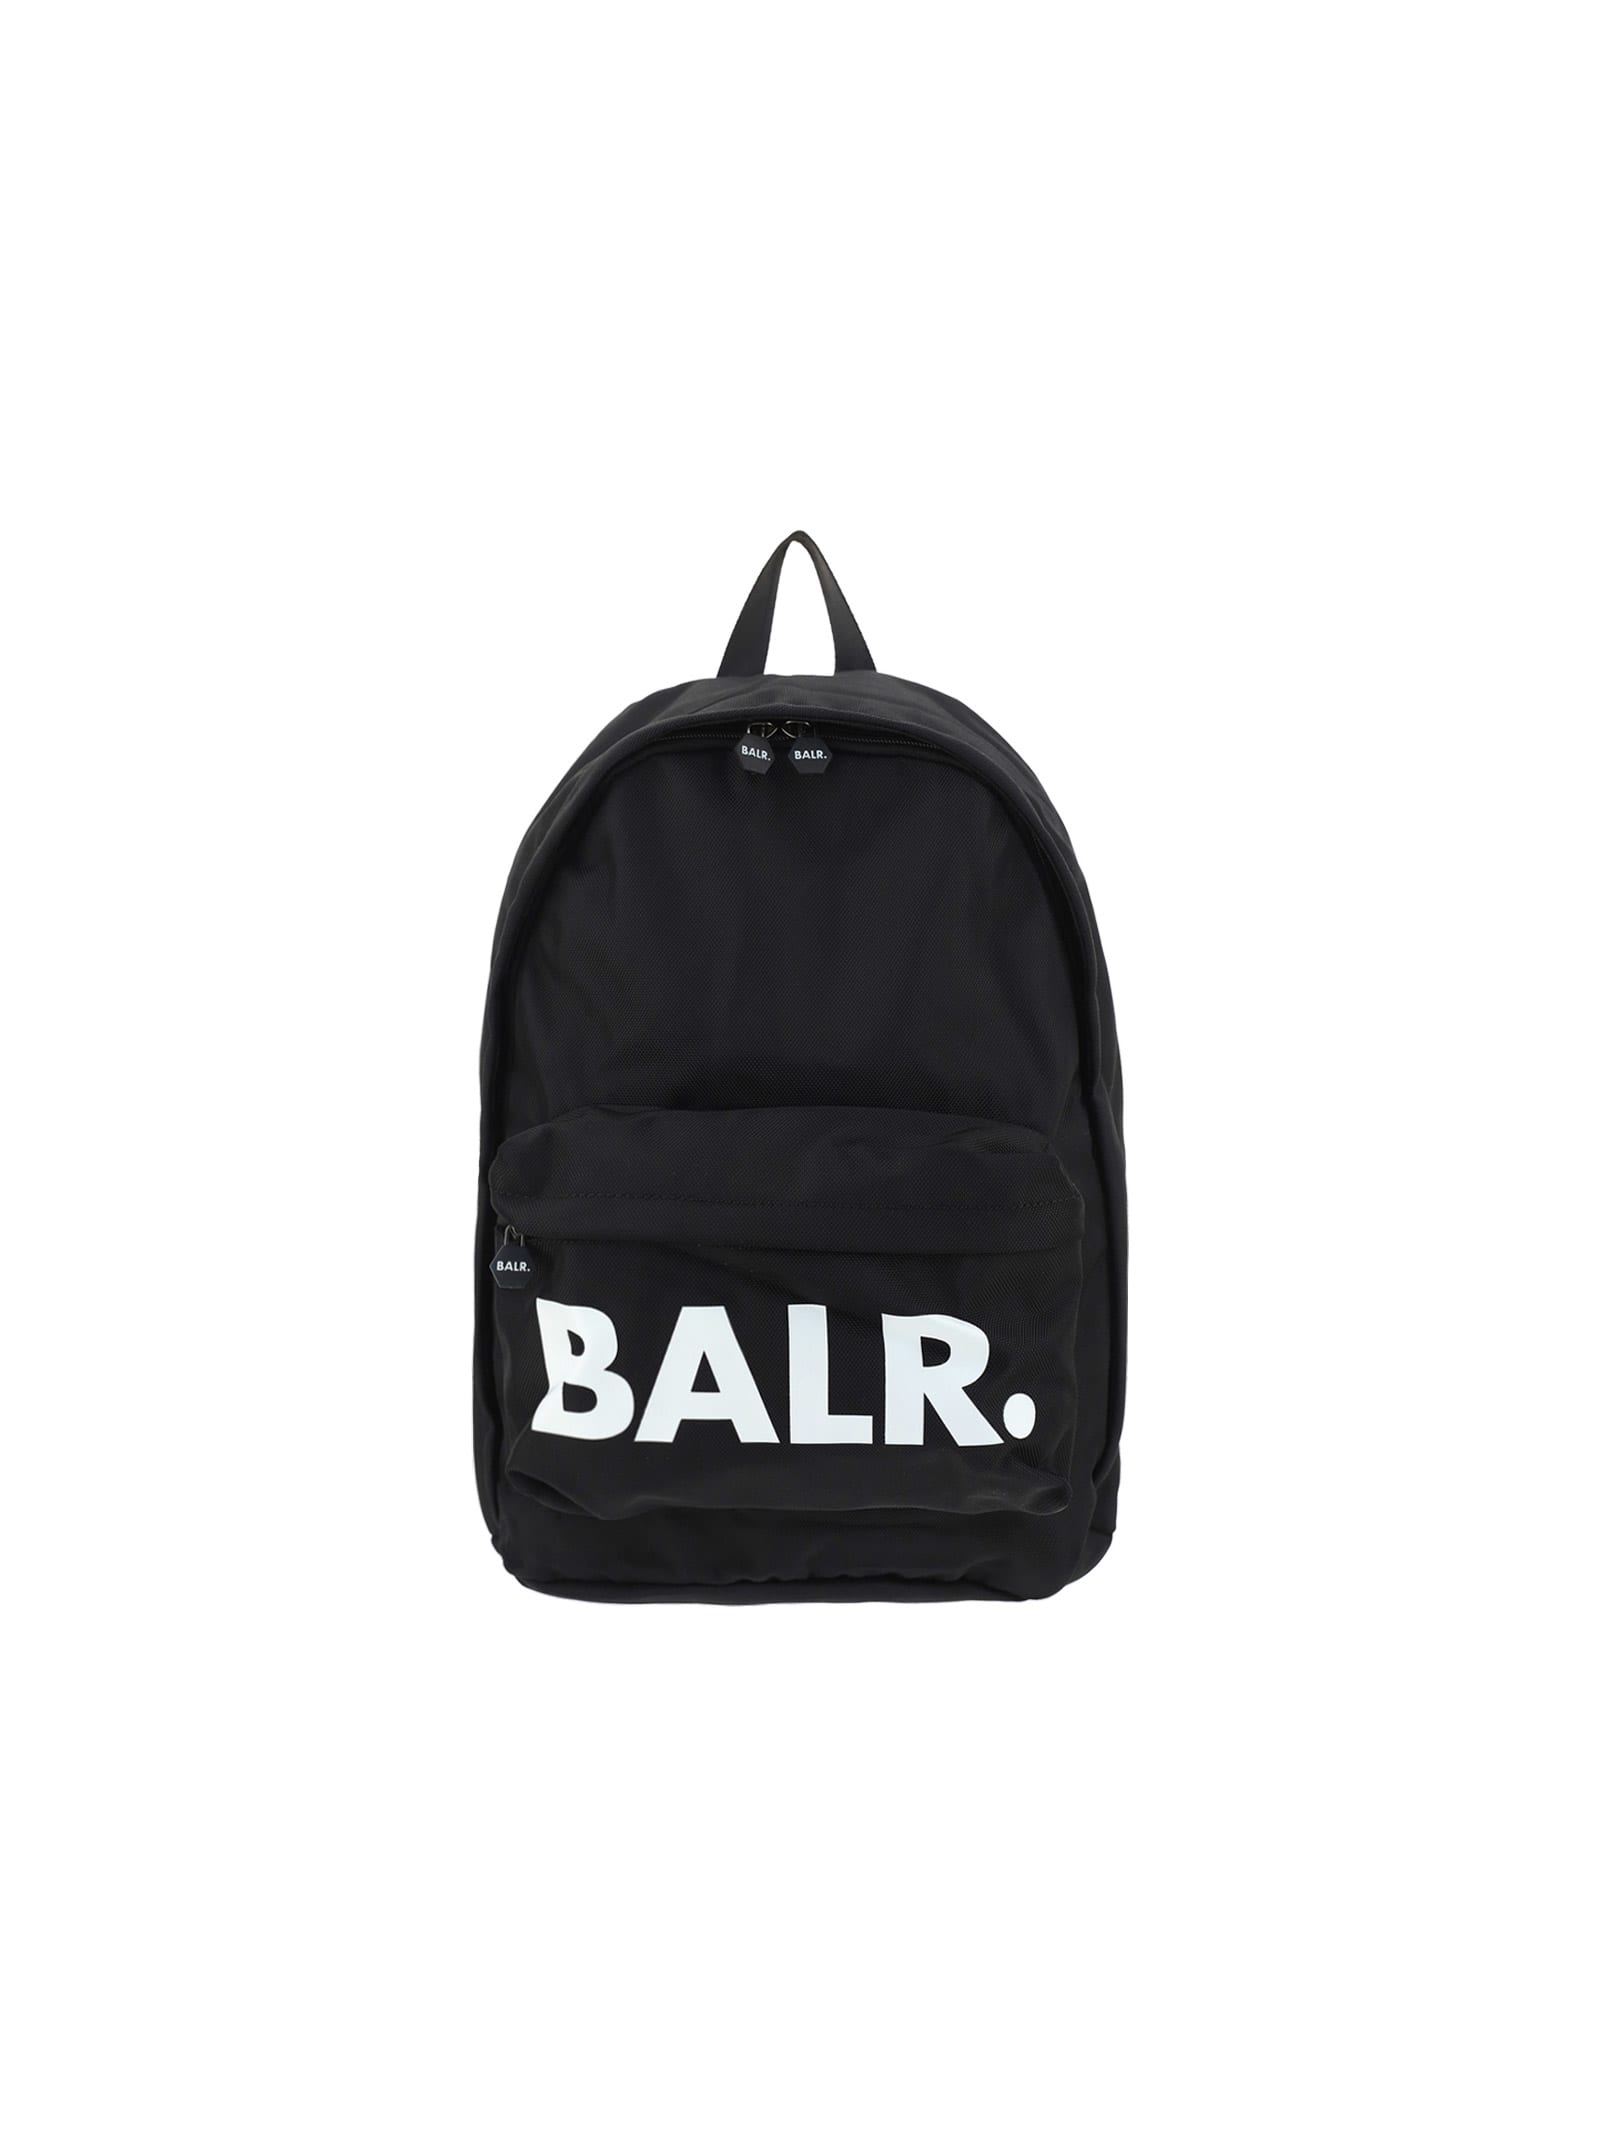 BALR. Balr Backpack